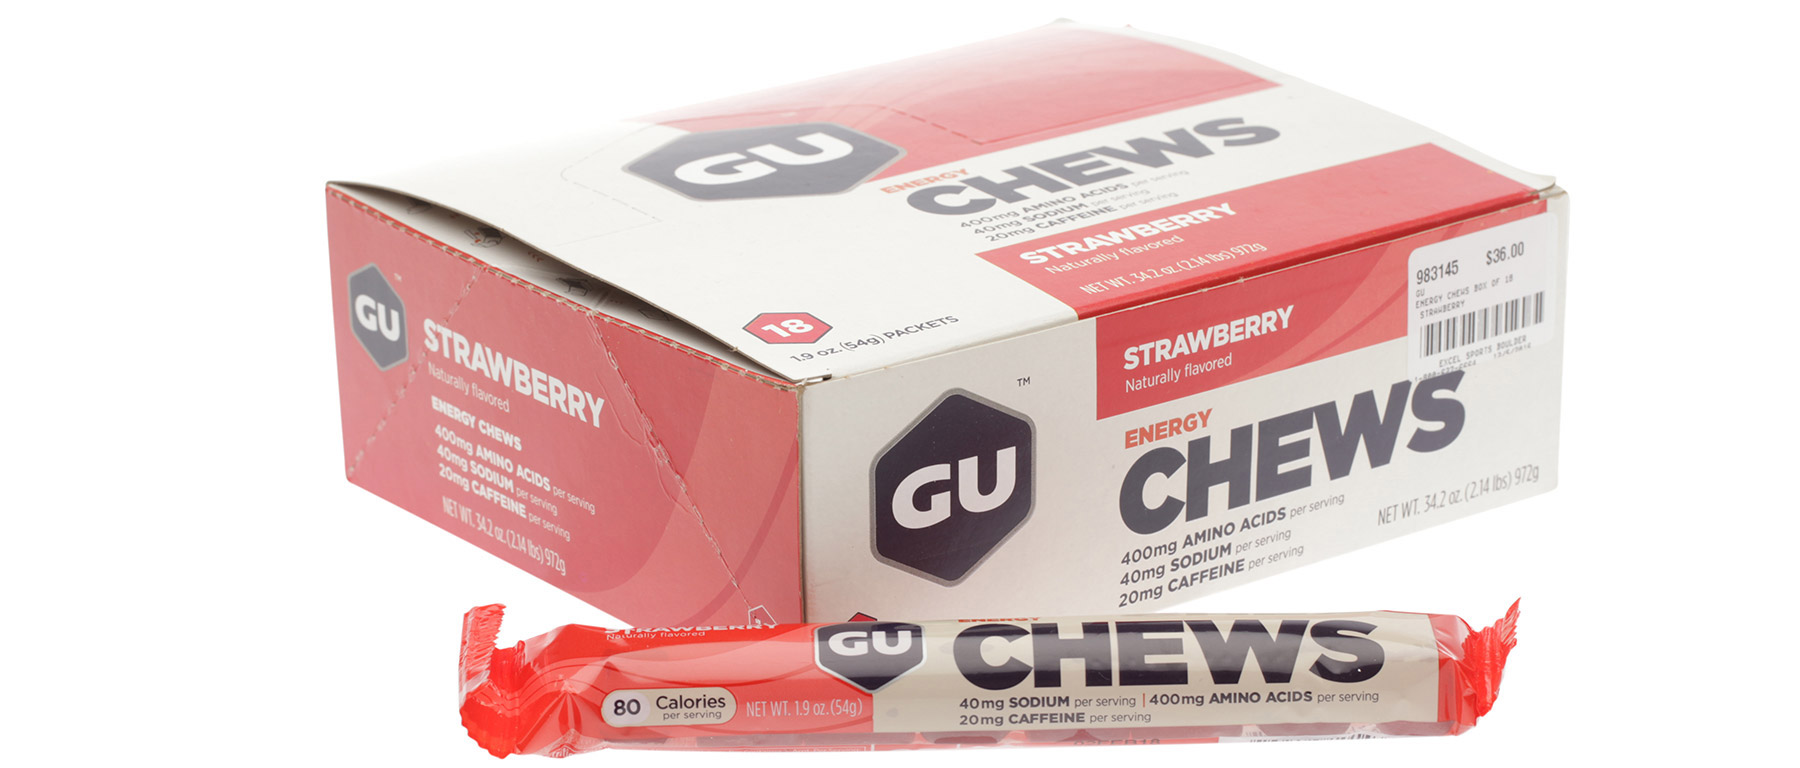 GU Energy Chews Box of 18